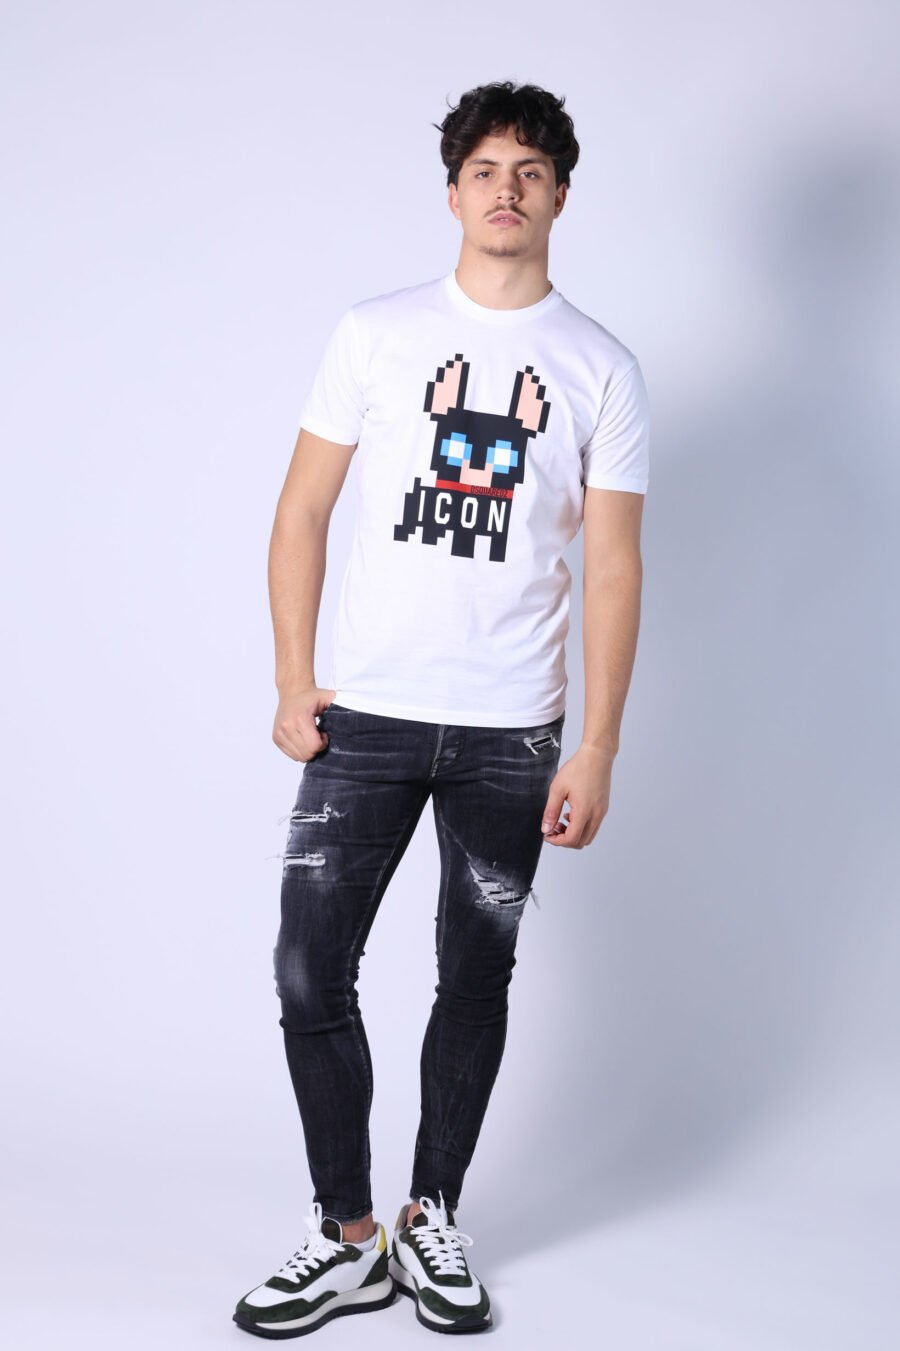 Camiseta blanca con maxilogo perro "Pixeled" - Untitled Catalog 05336